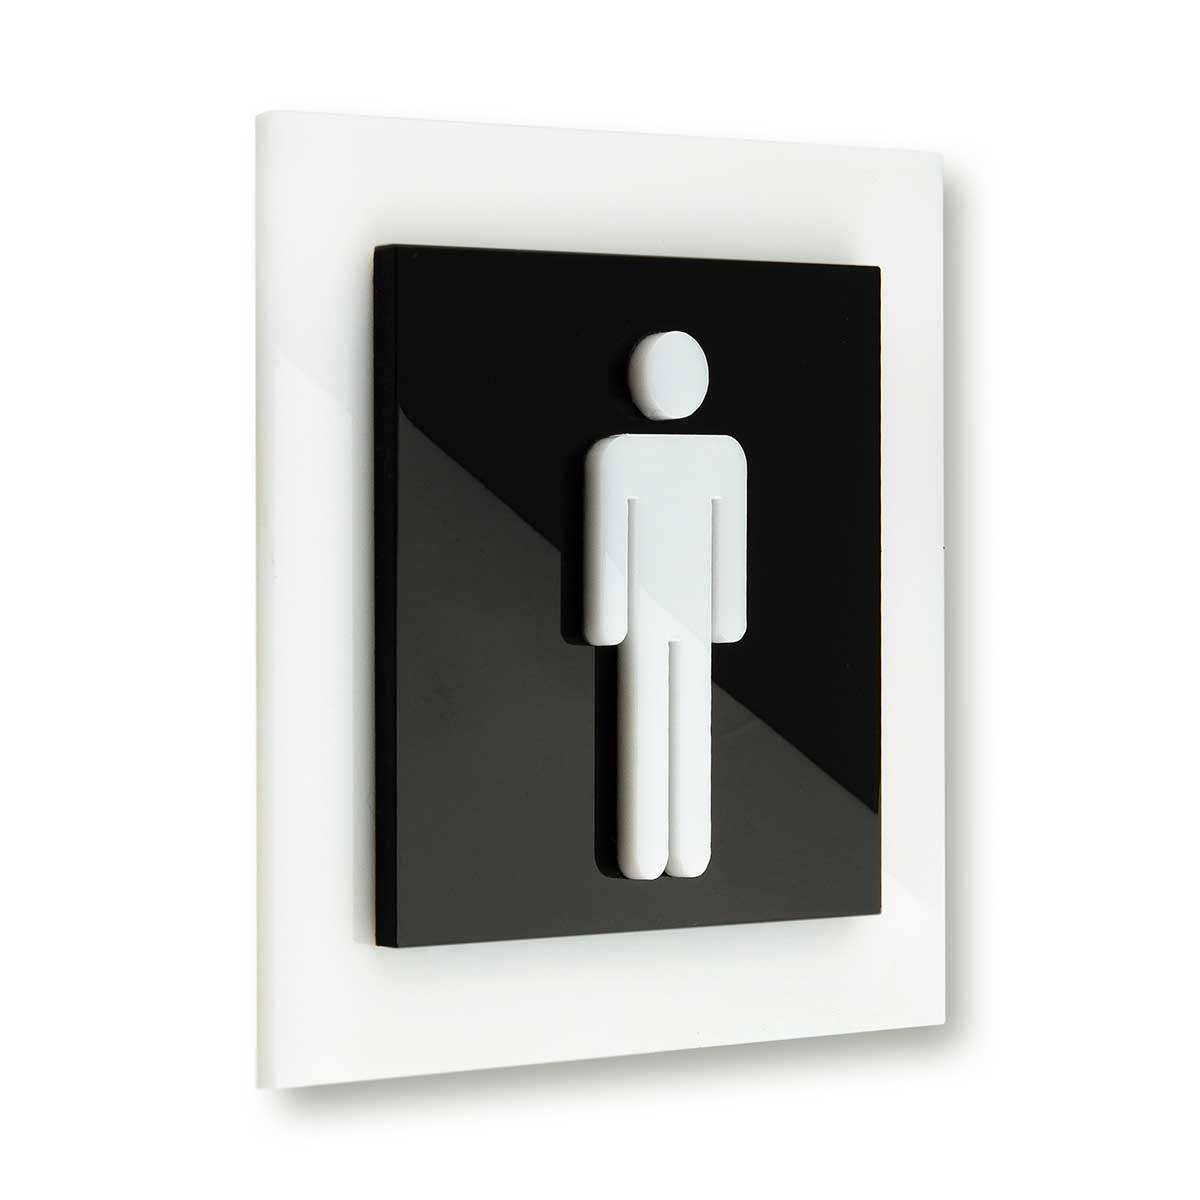 Acrylic Men Signs for Restroom Bathroom Signs black/white symbol Bsign